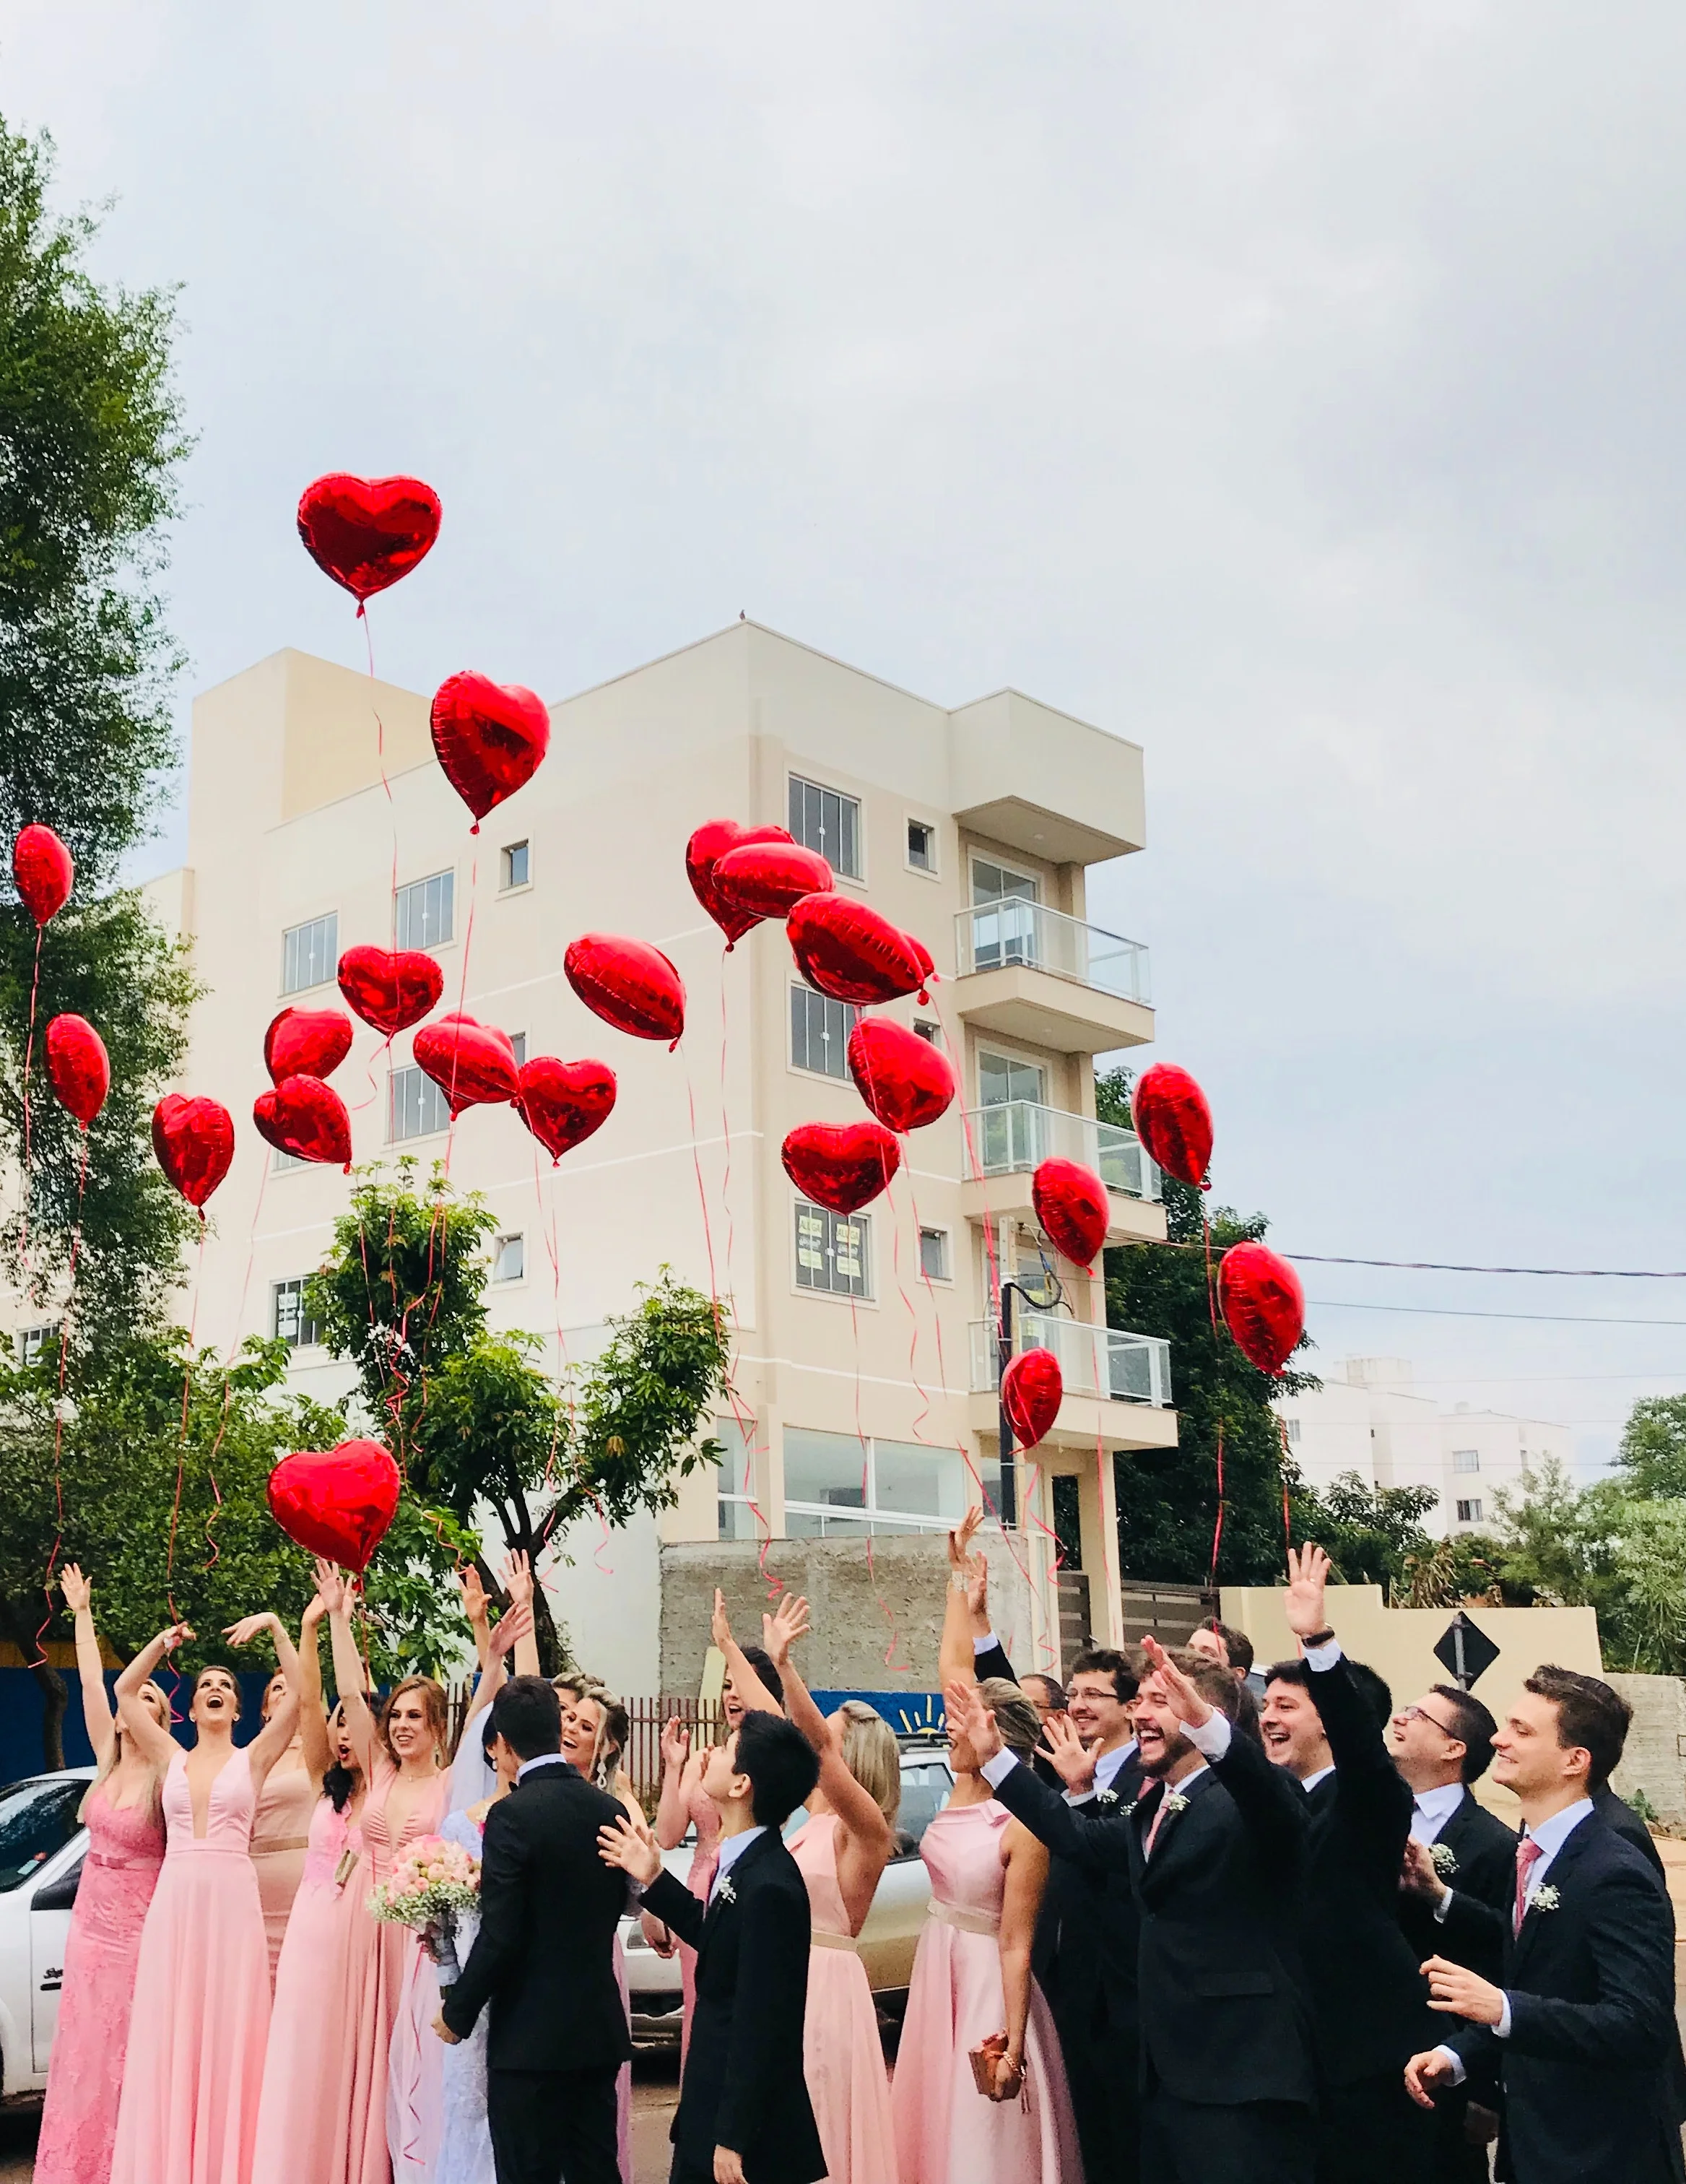 image of a wedding balloons